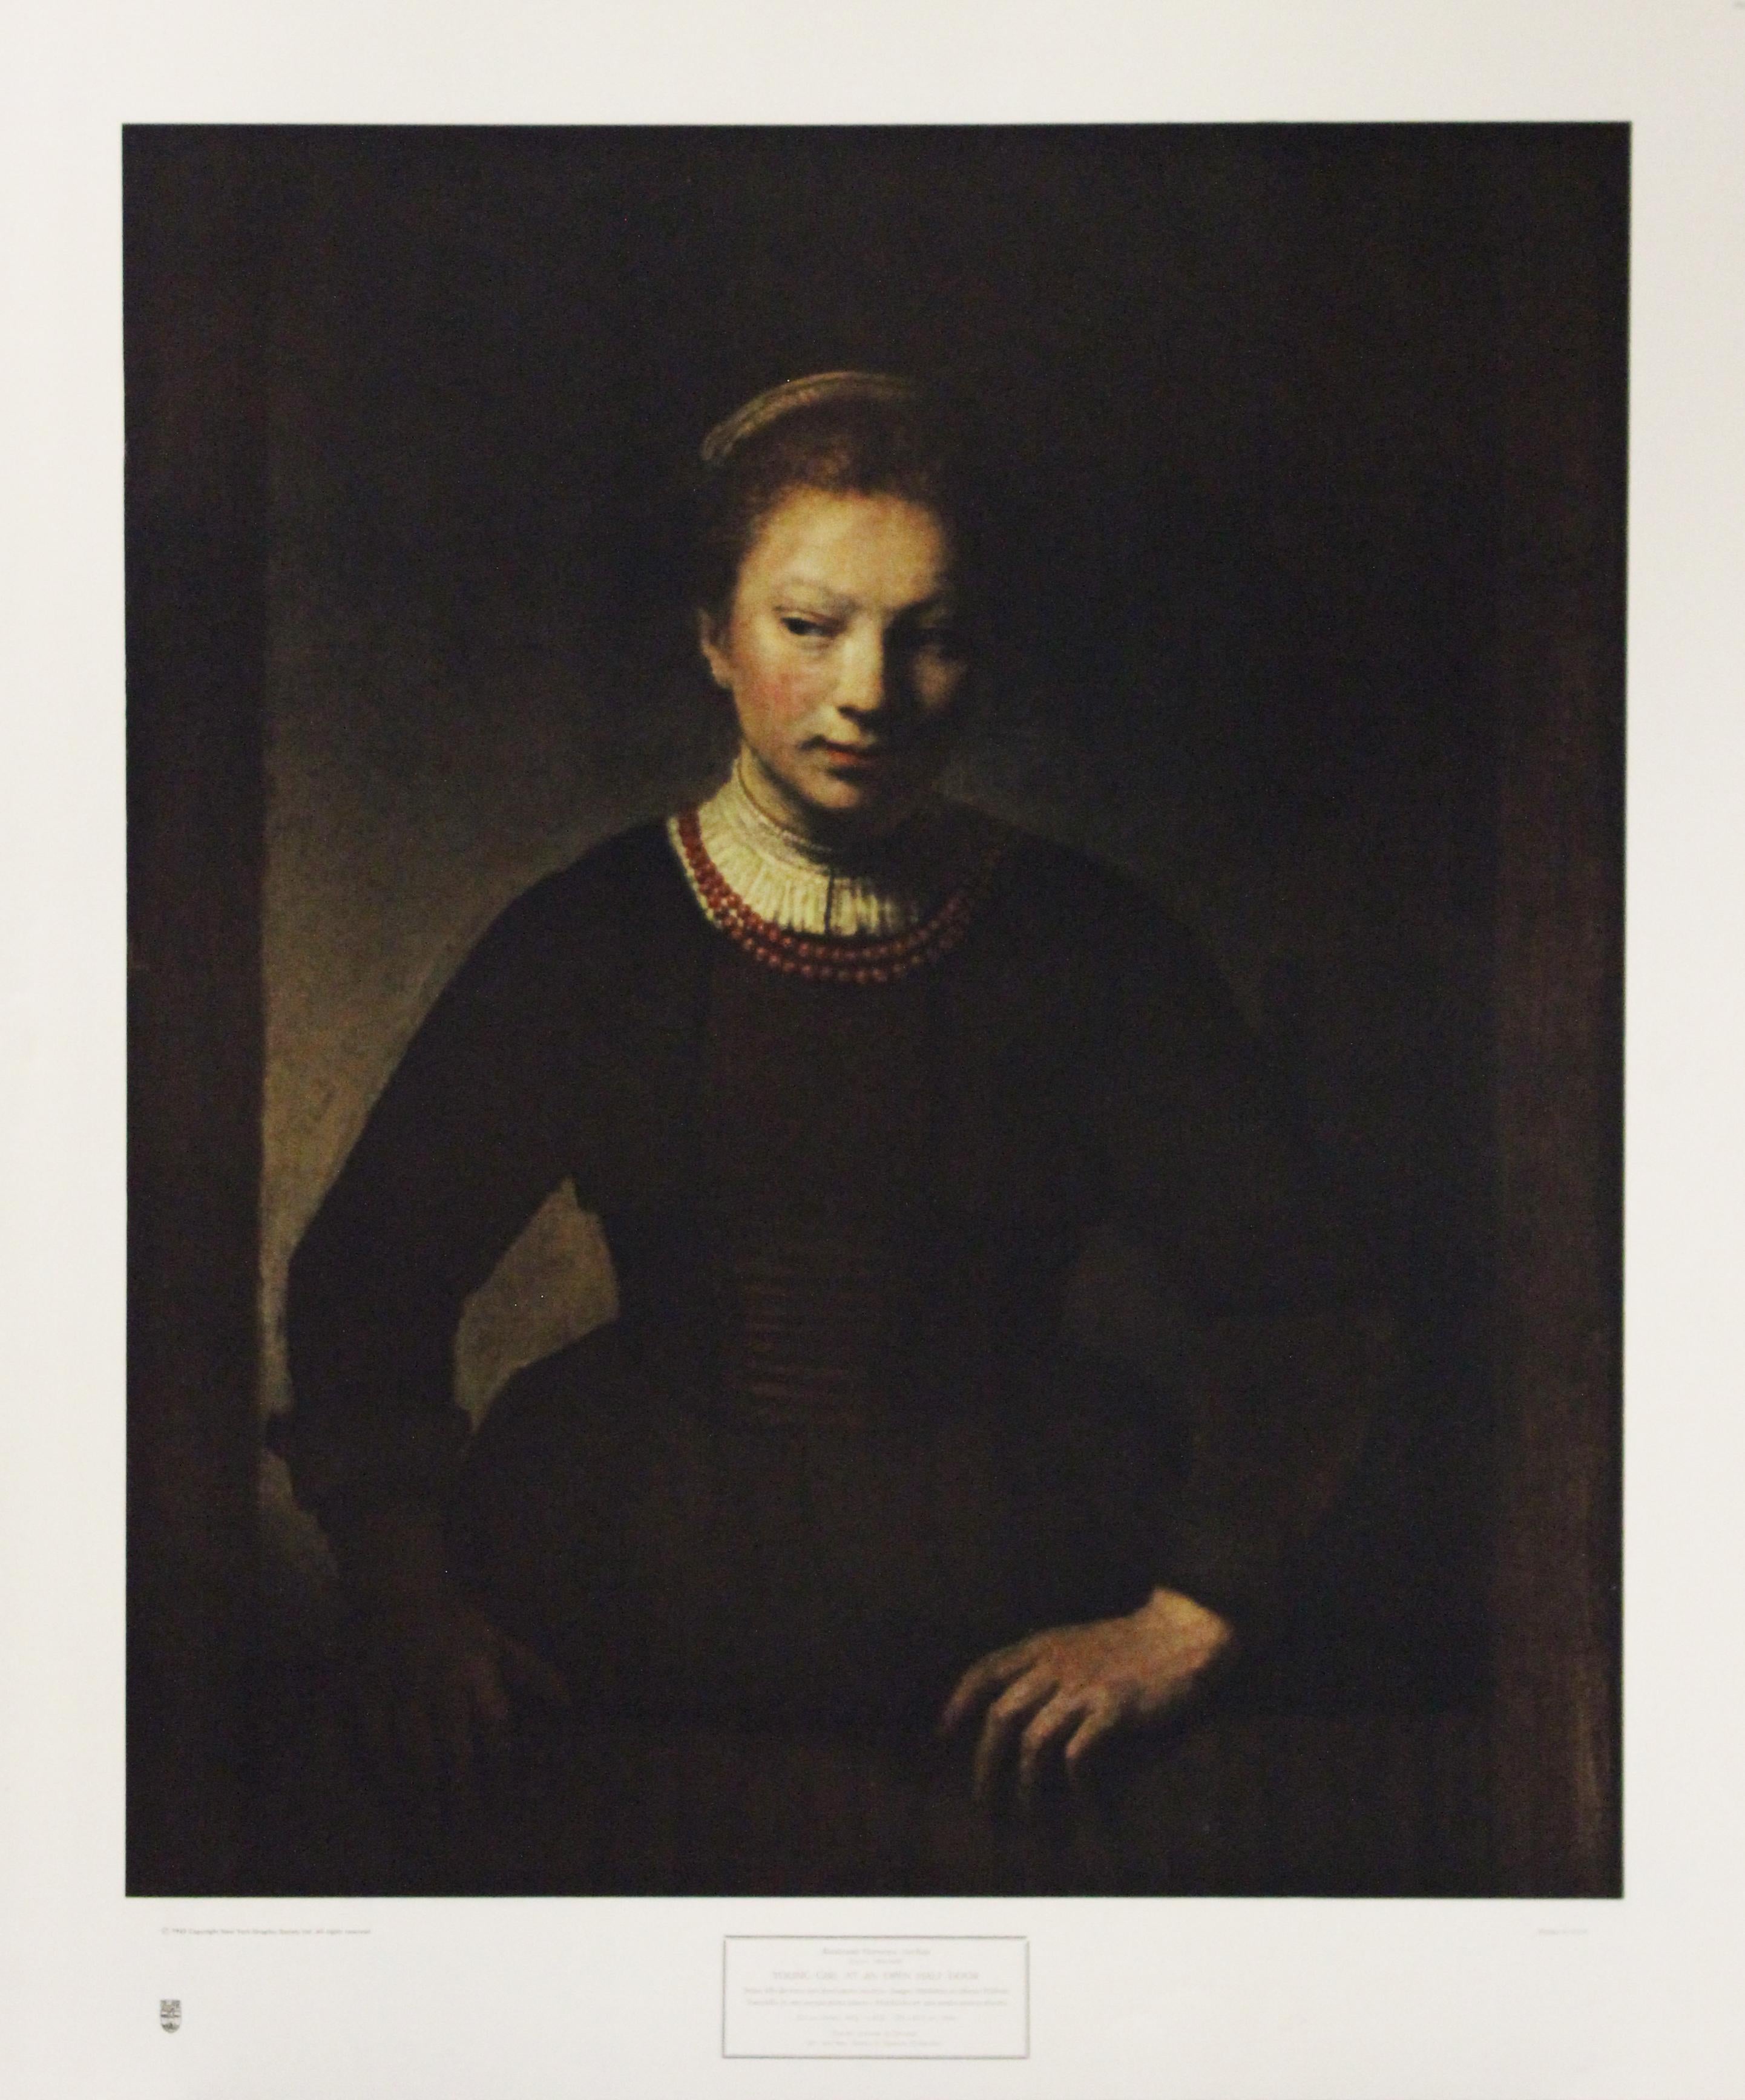 (After) Rembrandt van Rijn  Portrait Print - Young Girl At An Open Half Door-Poster. New York Graphic Society, Ltd.